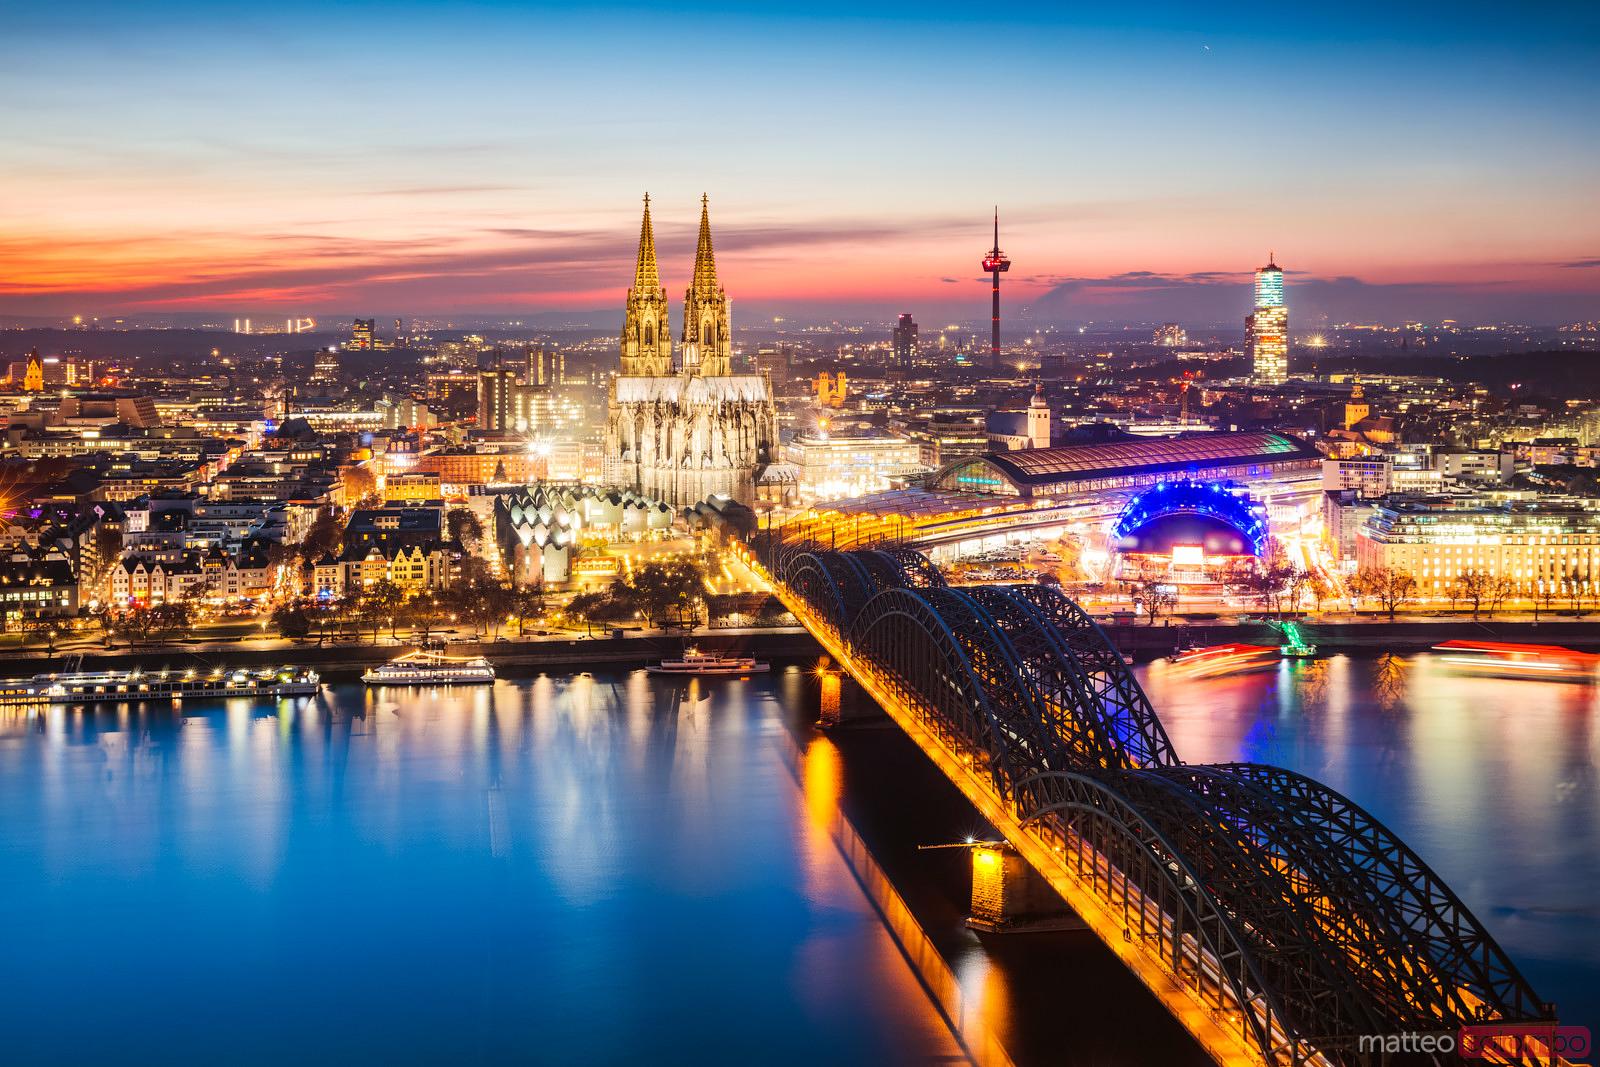 City skyline at night, Cologne, Germany